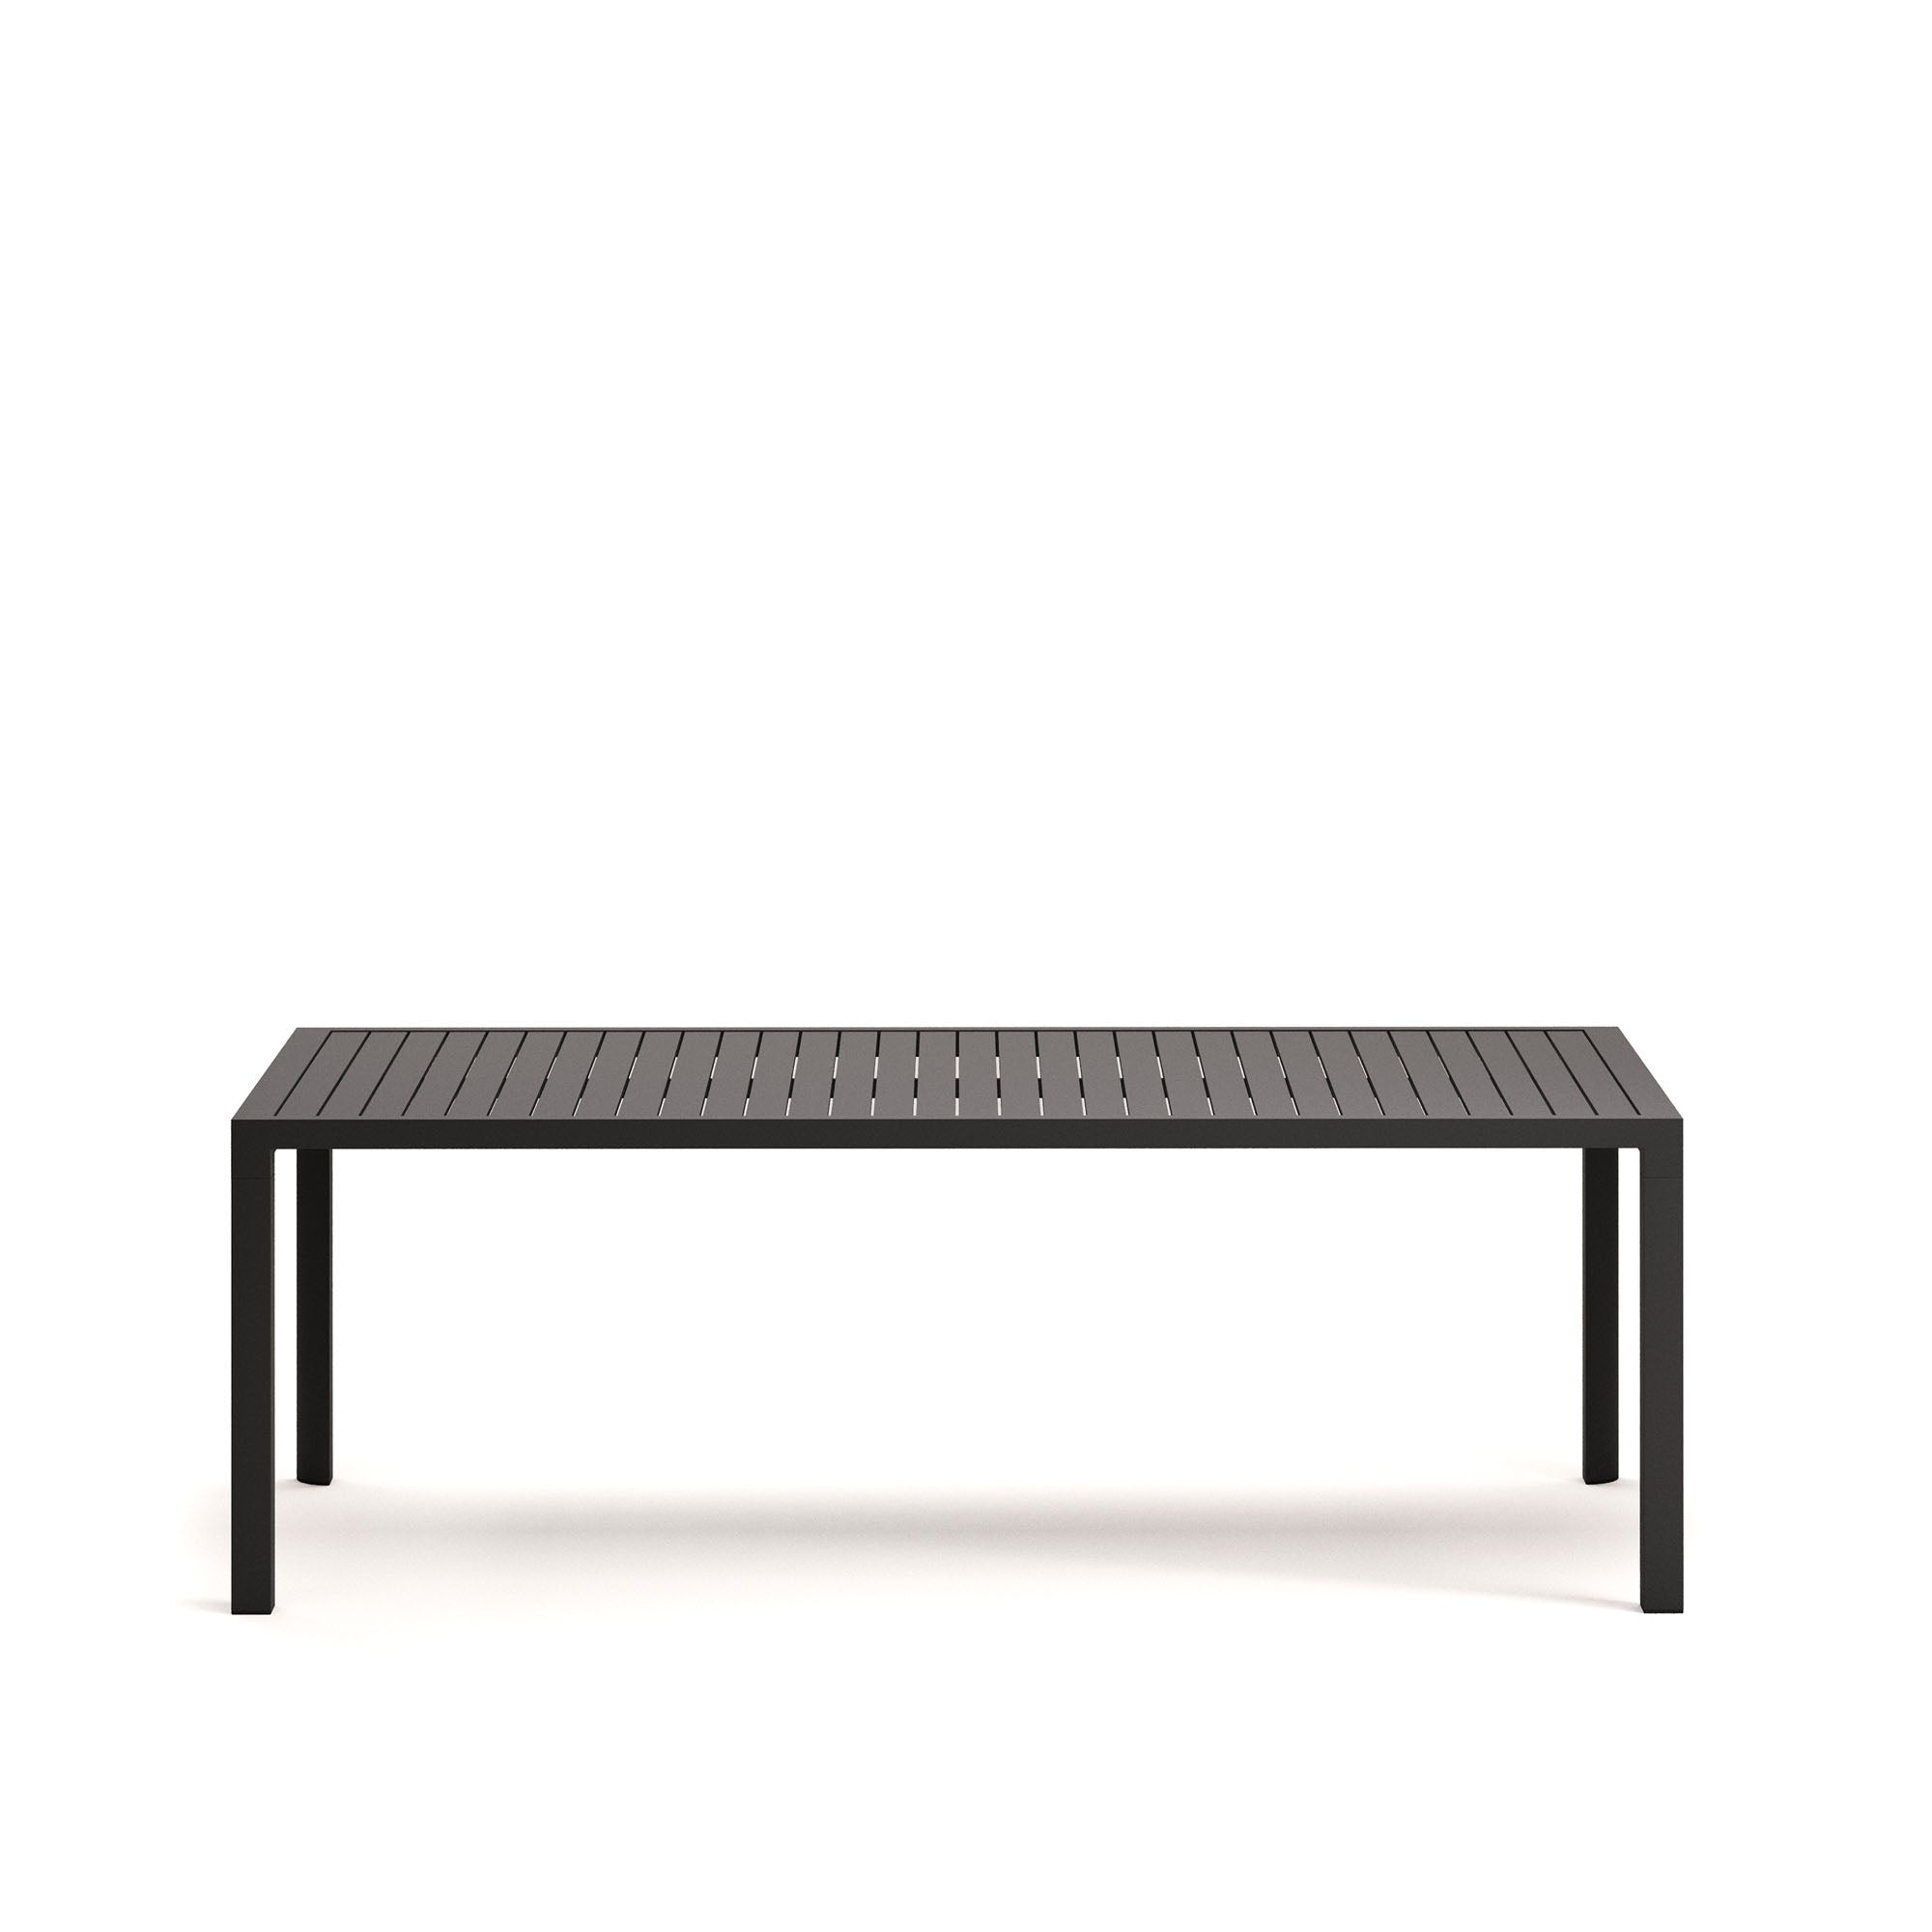 Culip aluminium outdoor table in powder coated grey finish, 220 x 100 cm